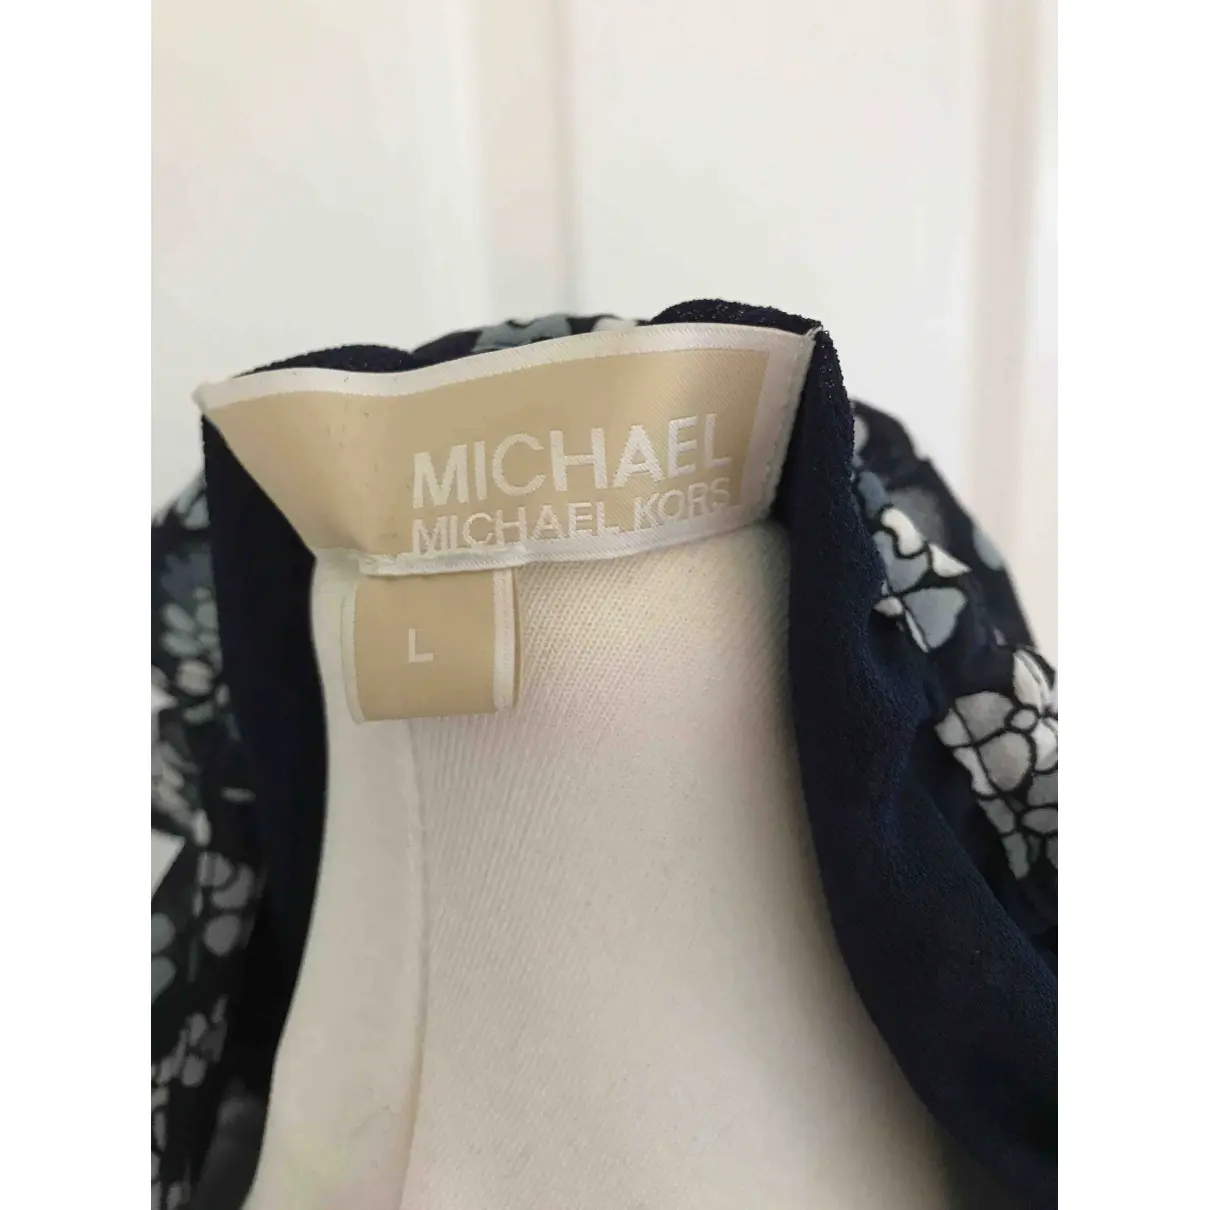 Buy Michael Kors Blue Polyester Top online